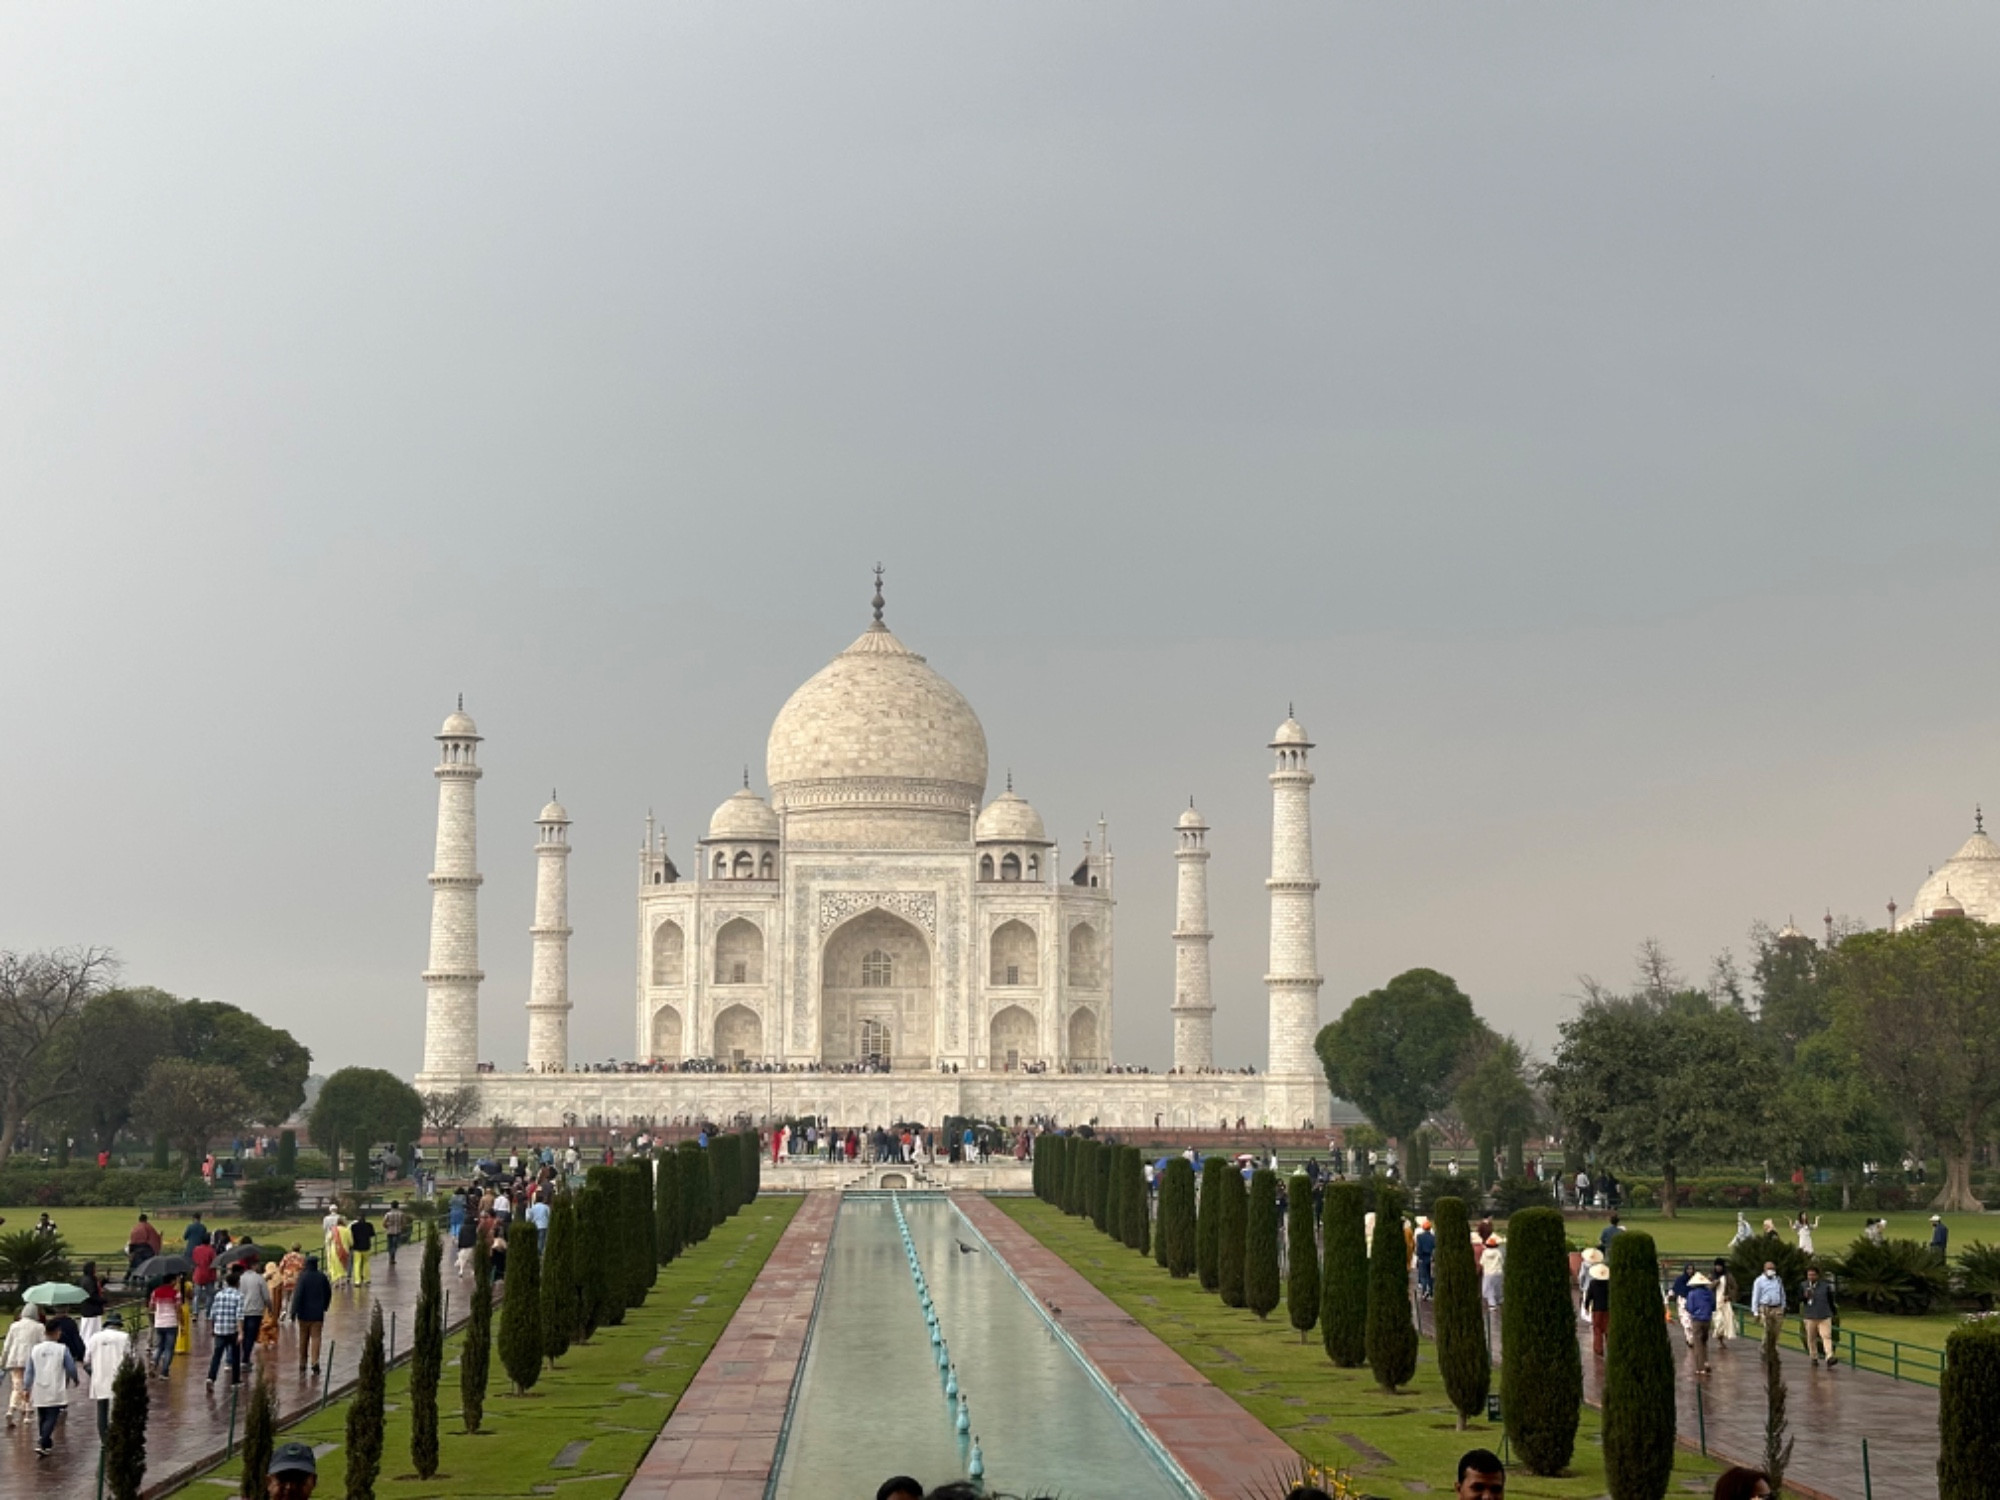 Beautiful Taj Mahal in Agra